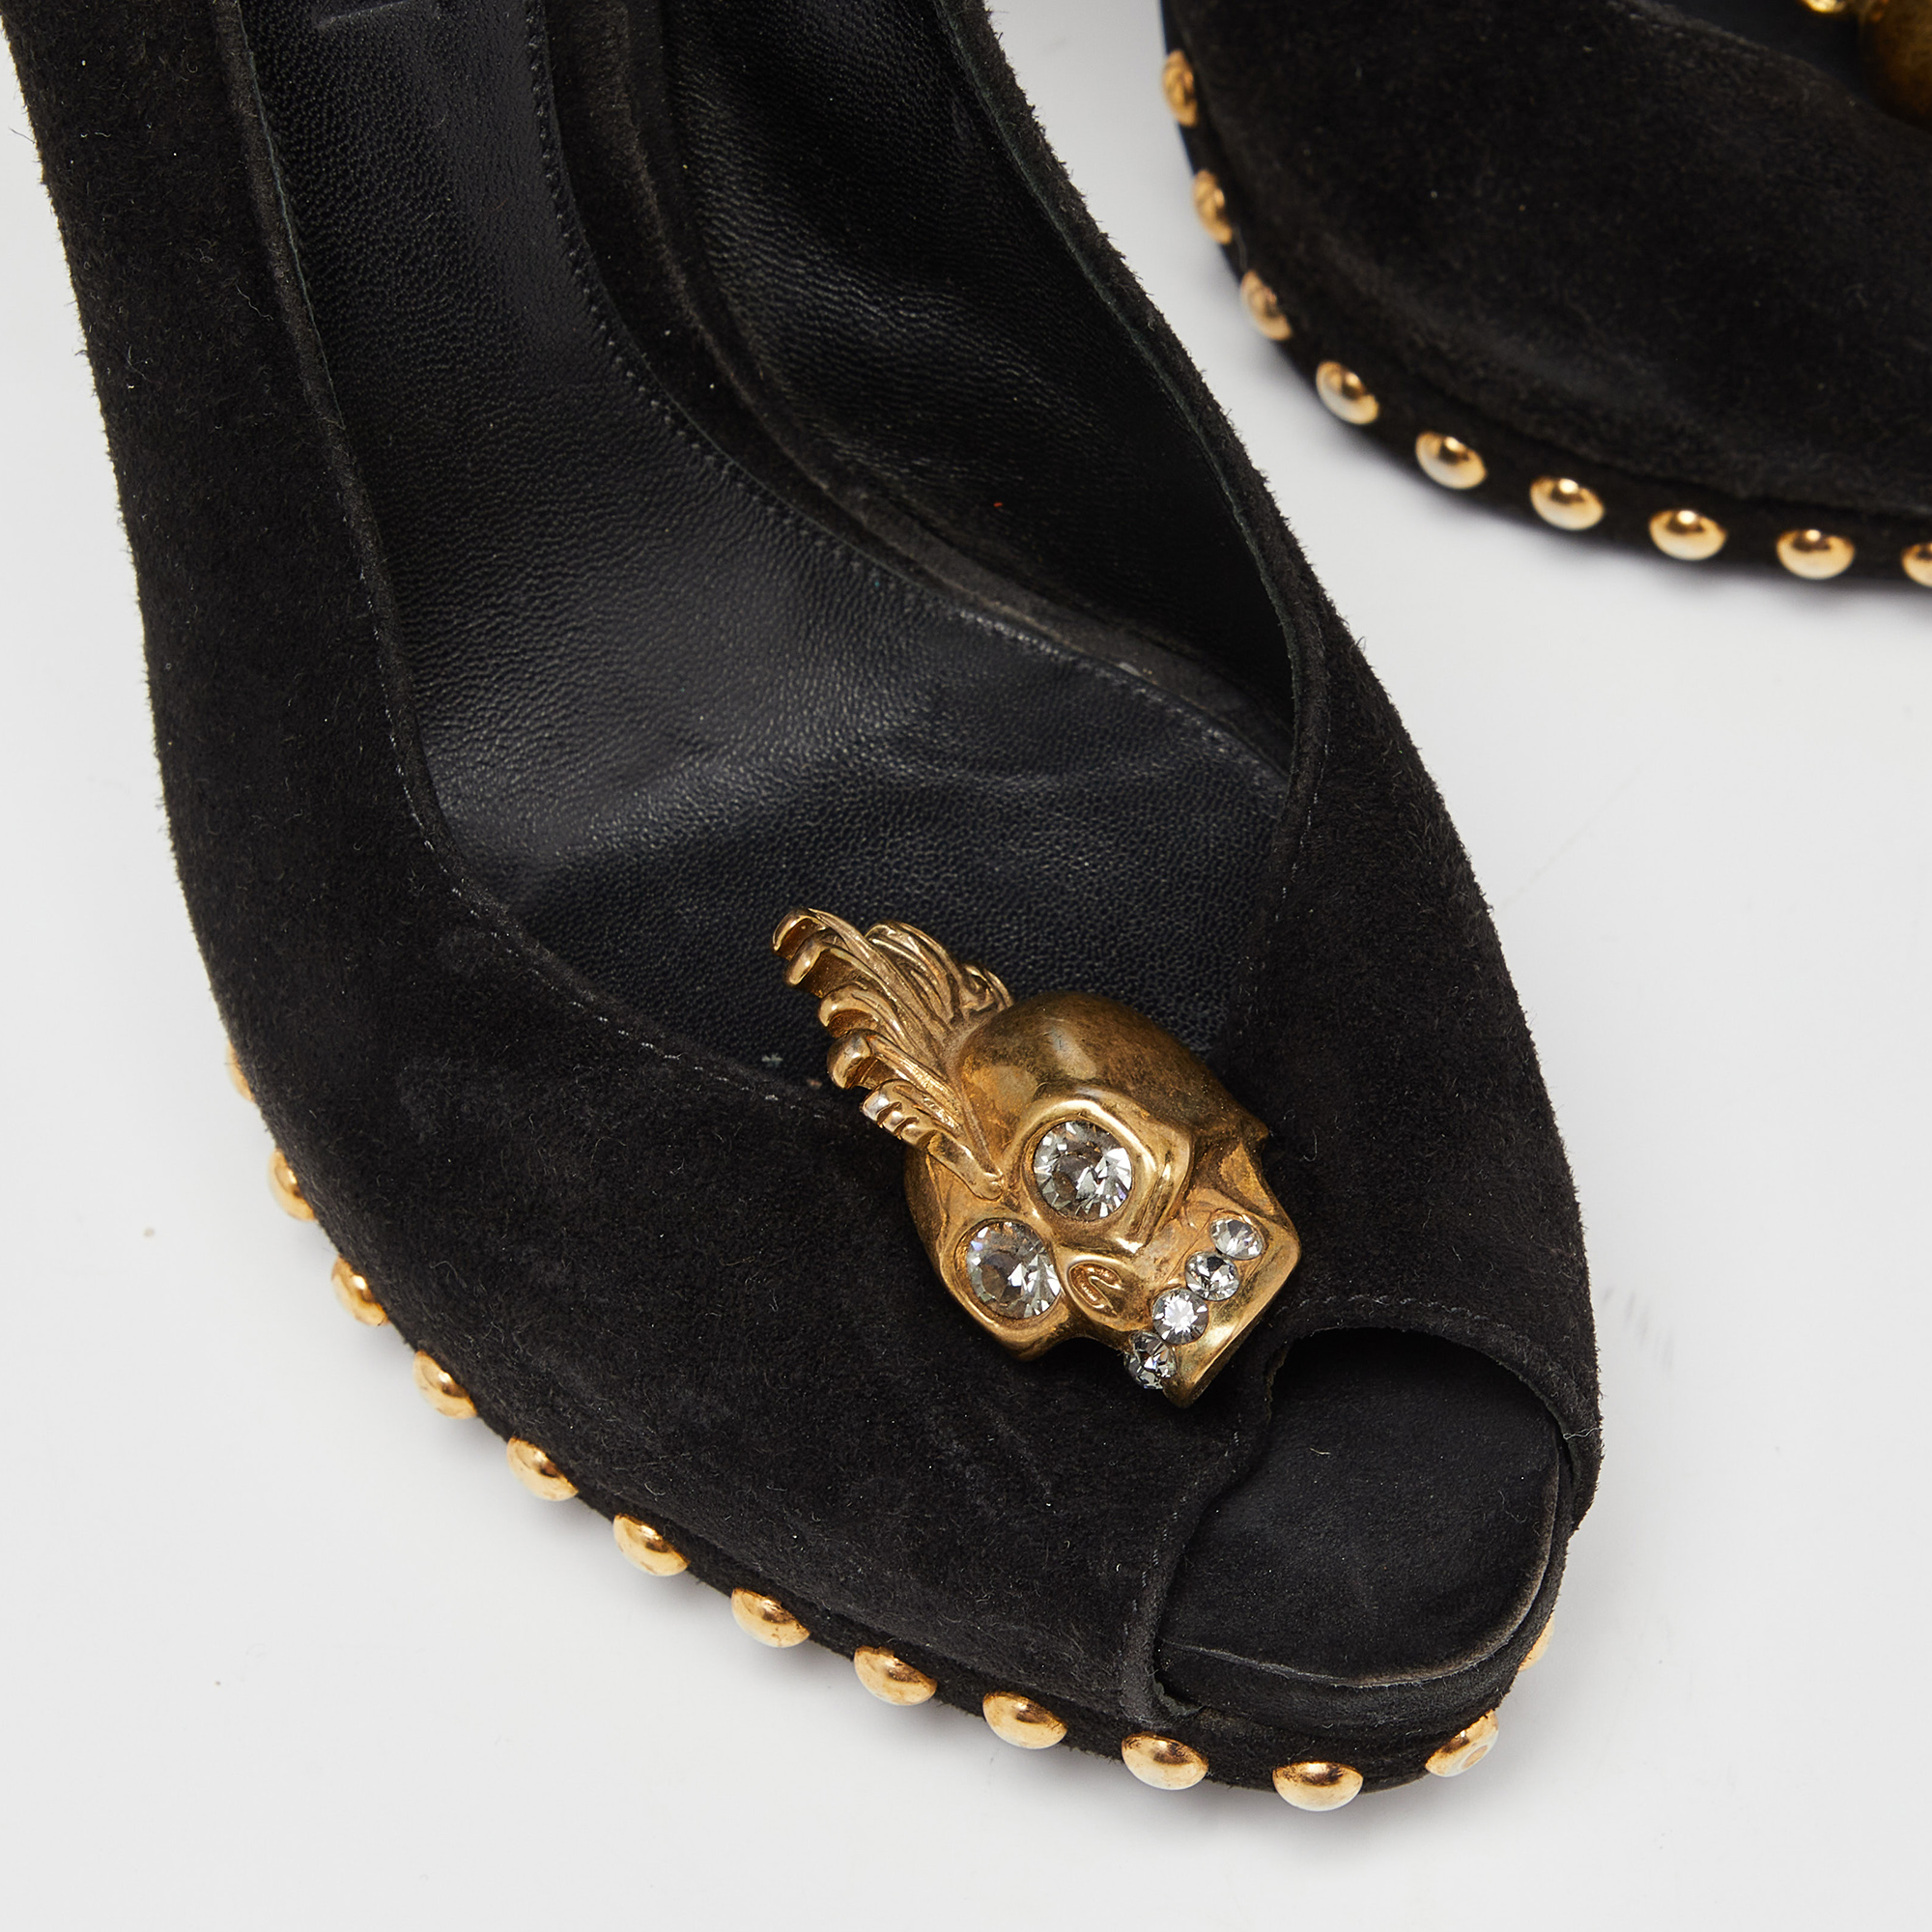 Alexander McQueen Black Suede Crystal Embellished Skull Peep Toe Pumps Size 38.5